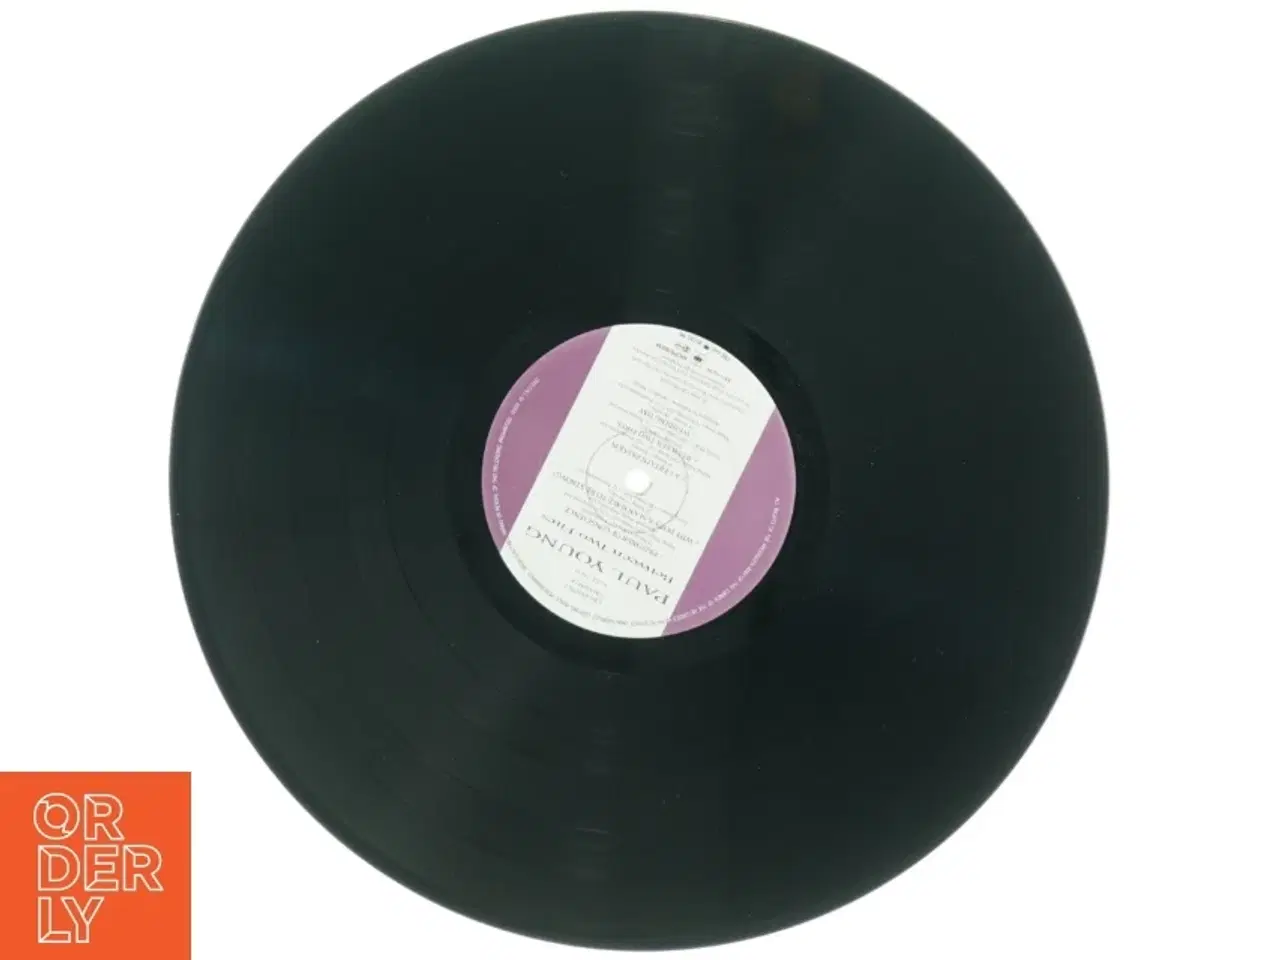 Billede 4 - Paul Young - Between Two Fires LP fra CBS Records (str. 31 x 31 cm)